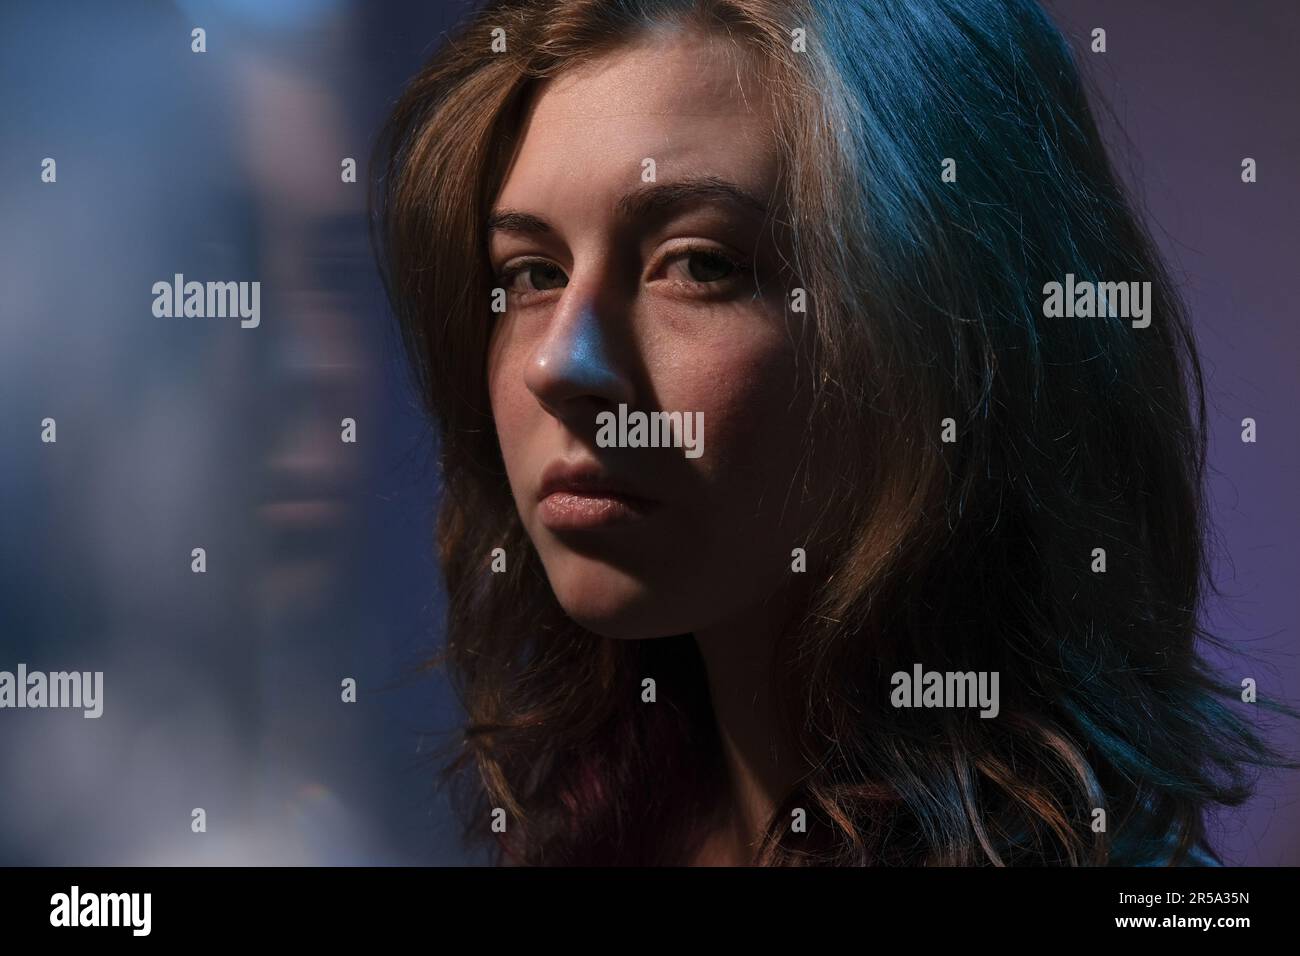 Portrait of sad teen girl looking at camera. Stock Photo